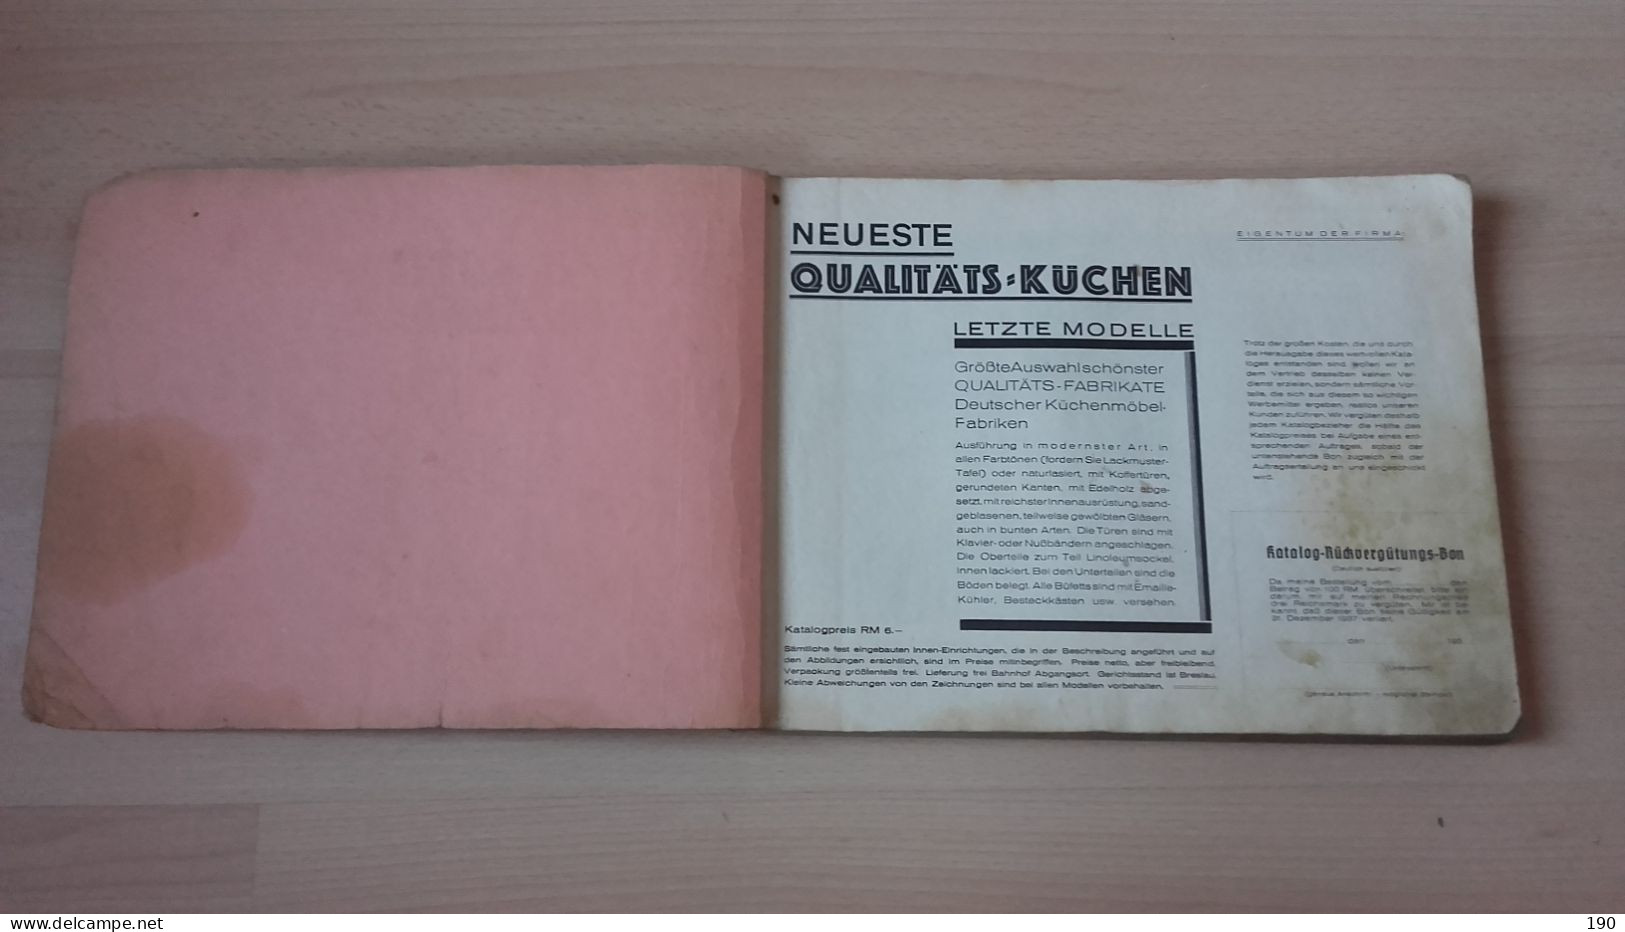 Carton Catalogue/catalog Of Furniture.Katalog Der Mobel.Besonders Schone Modelle Qualitats Kuchen - Old Books